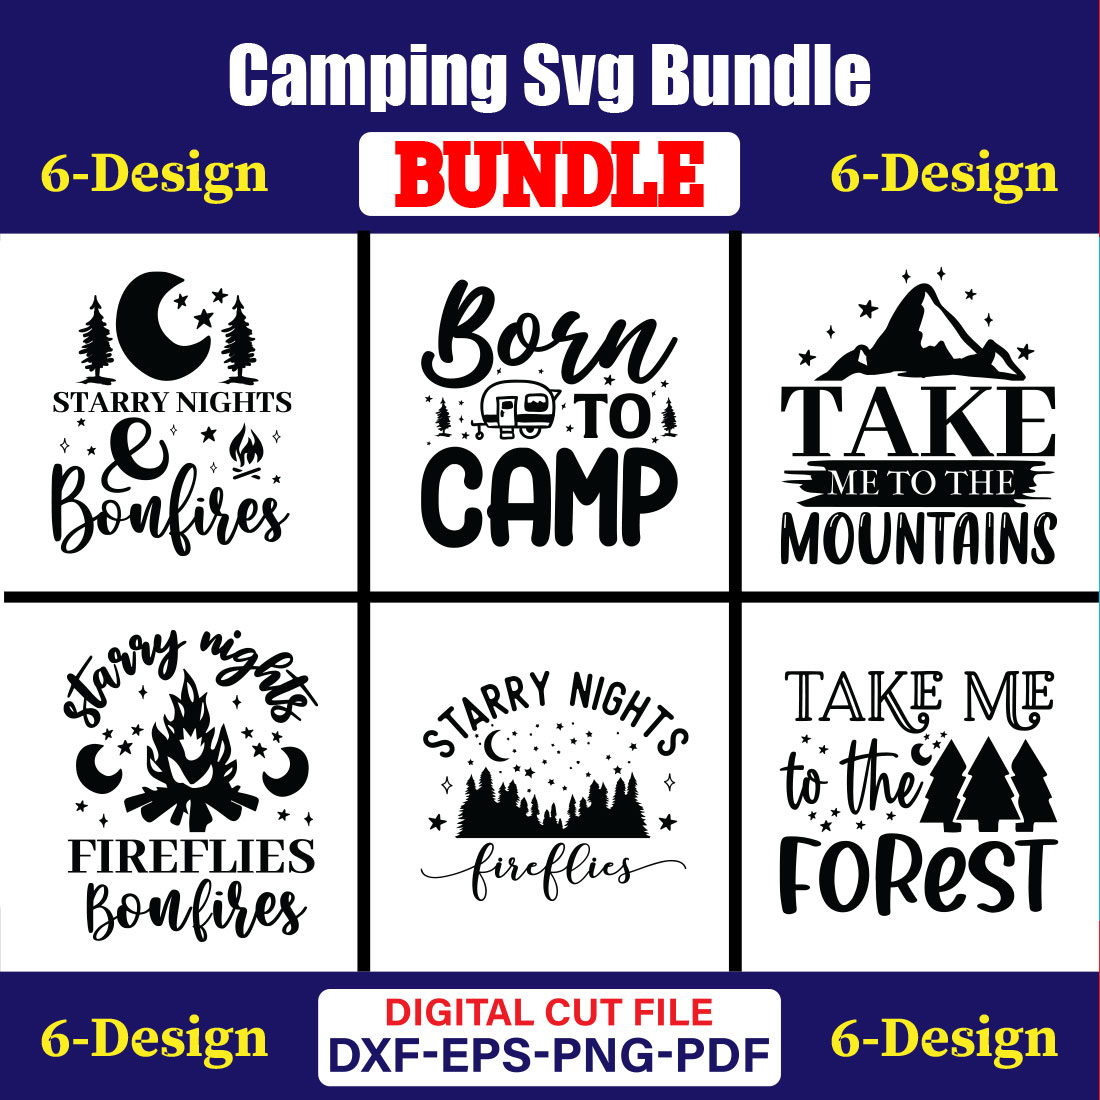 Camping T-shirt Design Bundle Vol-7 cover image.